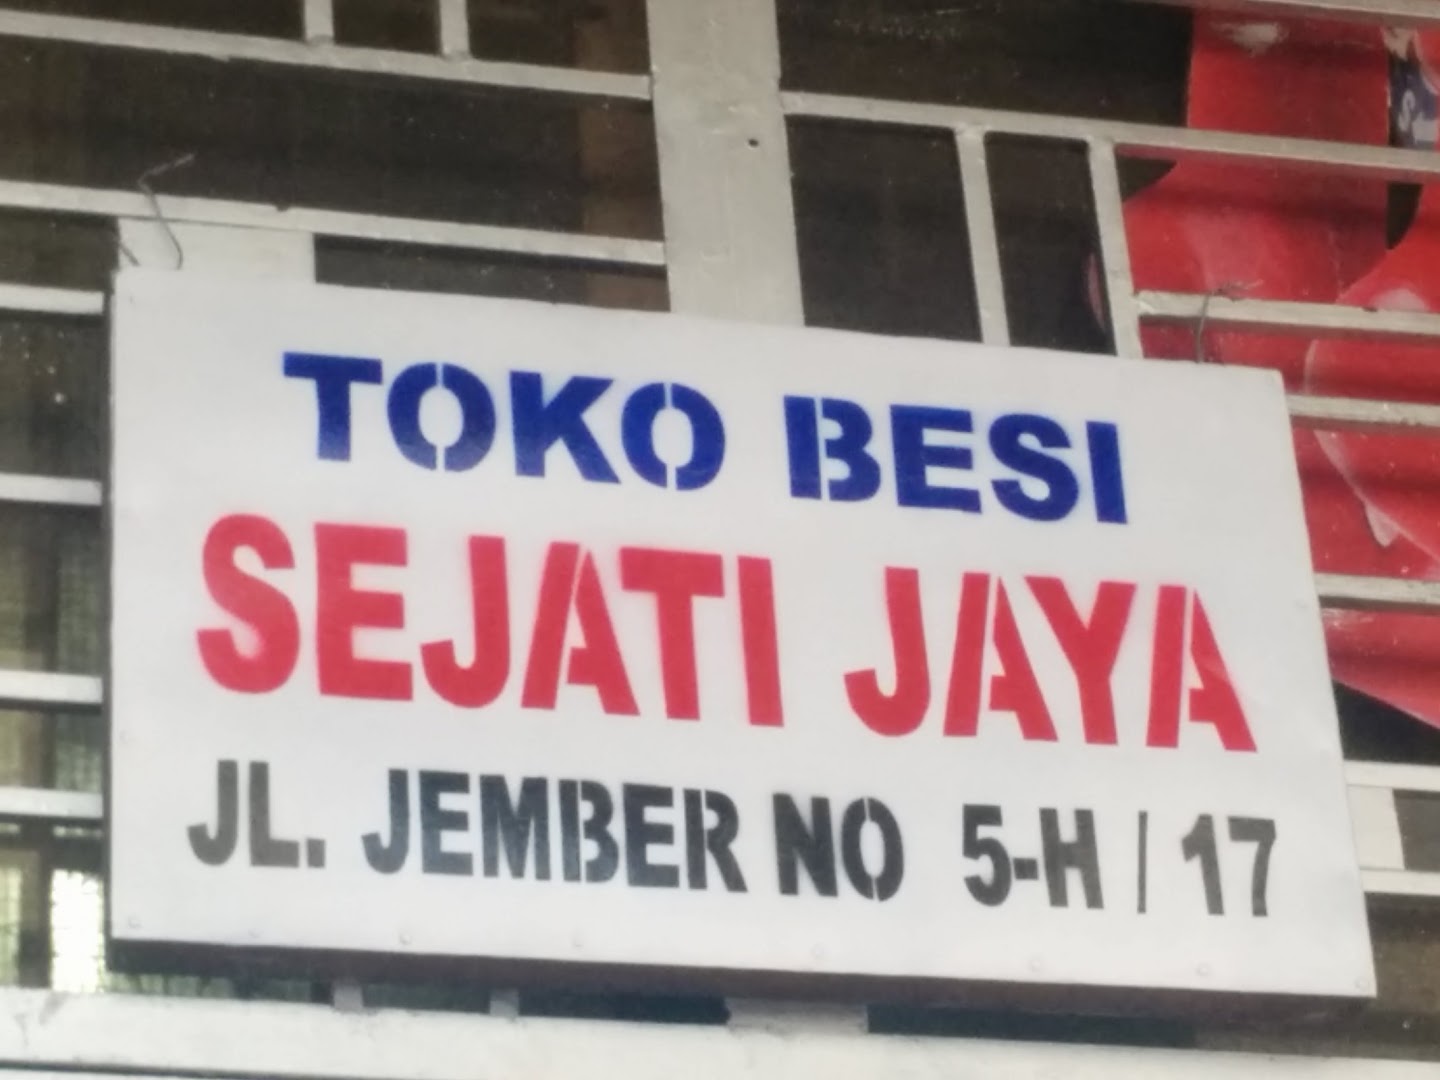 Toko Besi Sejati Jaya Photo